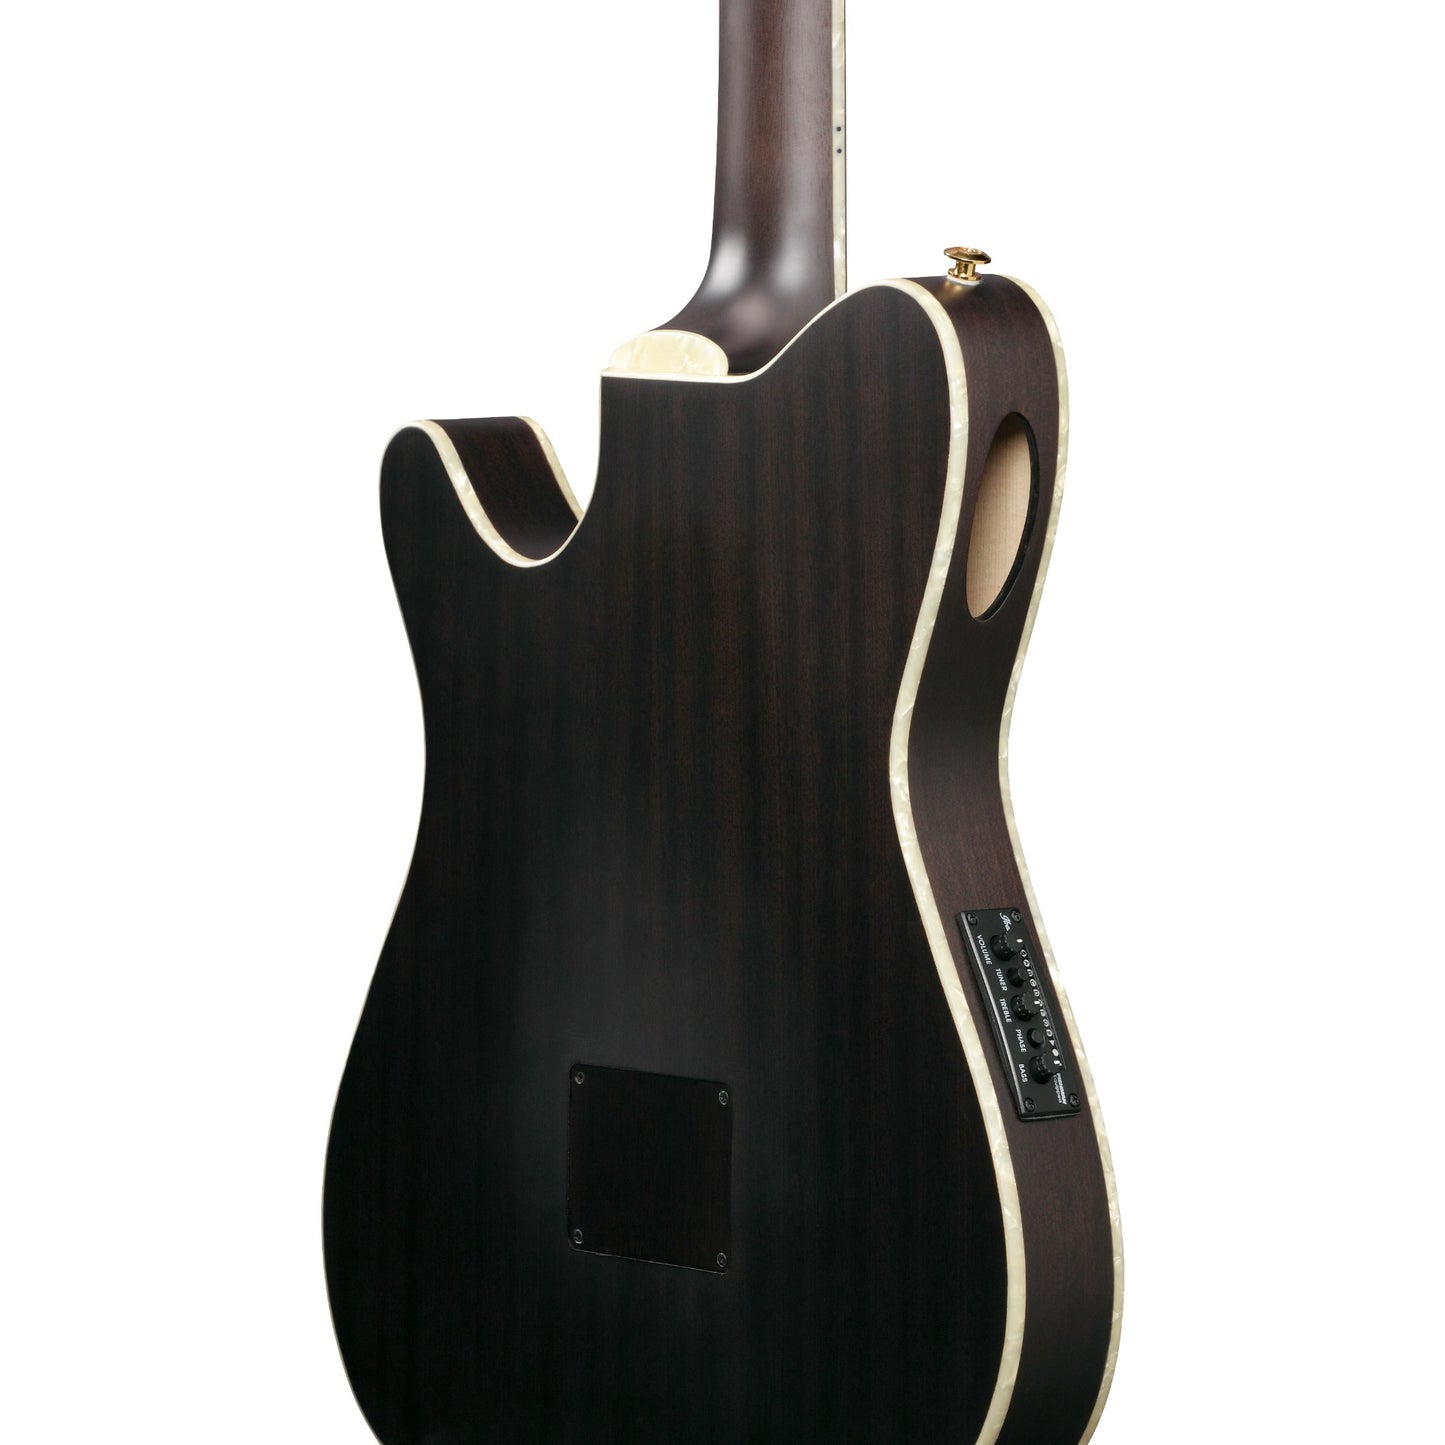 Ibanez TOD10N Tim Henson Signature Nylon Guitar in Transparent Black Flat